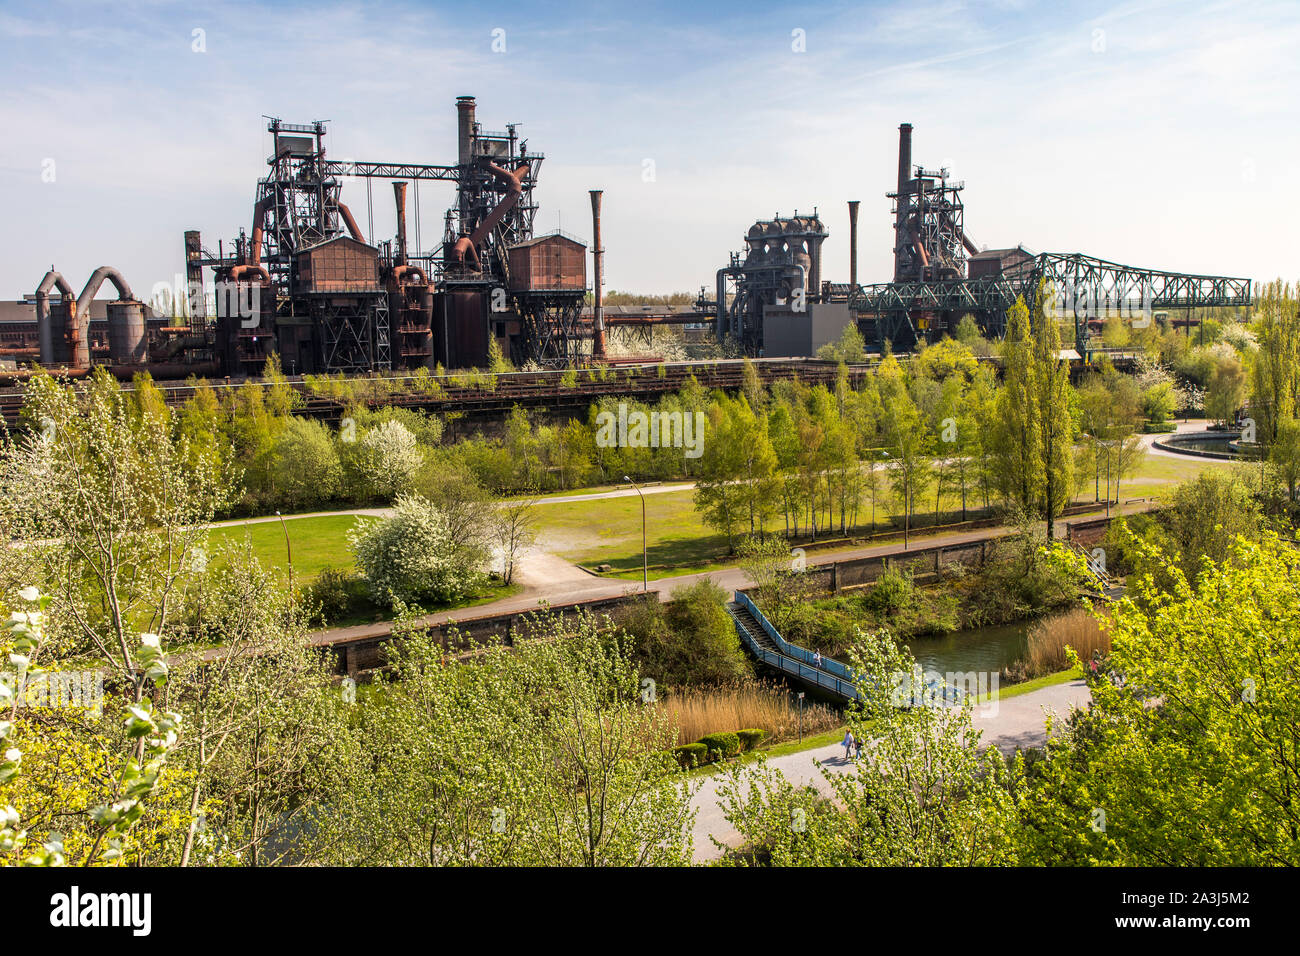 Landscape park Duisburg, north, former steelworks, in Duisburg Meidrich, blast furnaces, clear water canal, Emscher promenade, Germany Stock Photo